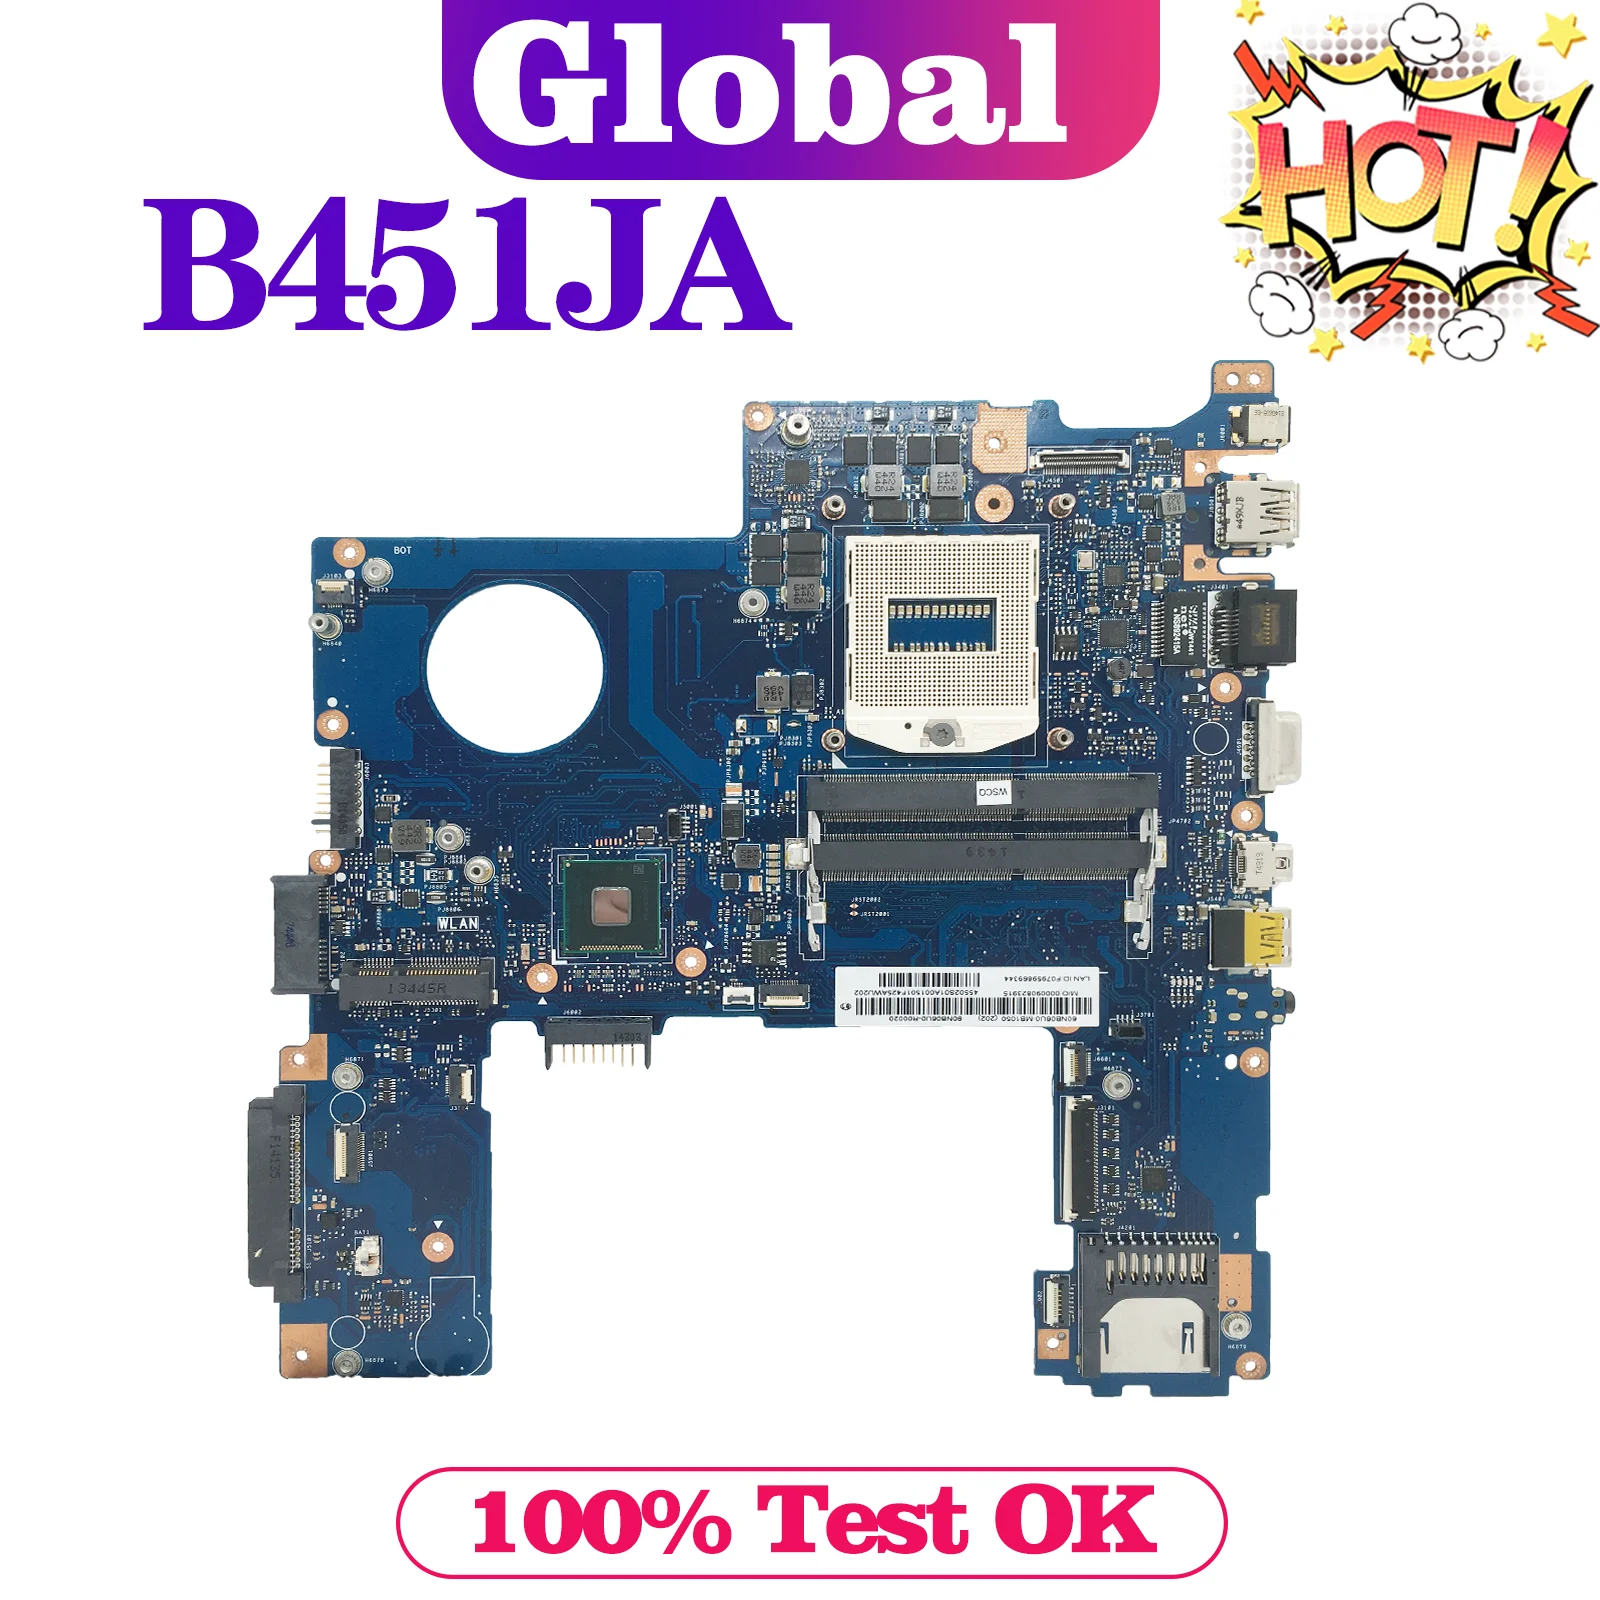 KEFU Mainboard B451J B451 B451JA Laptop Motherboard PGA-947 UMA REV:2.0 MAIN BOARD 100% TEST OK